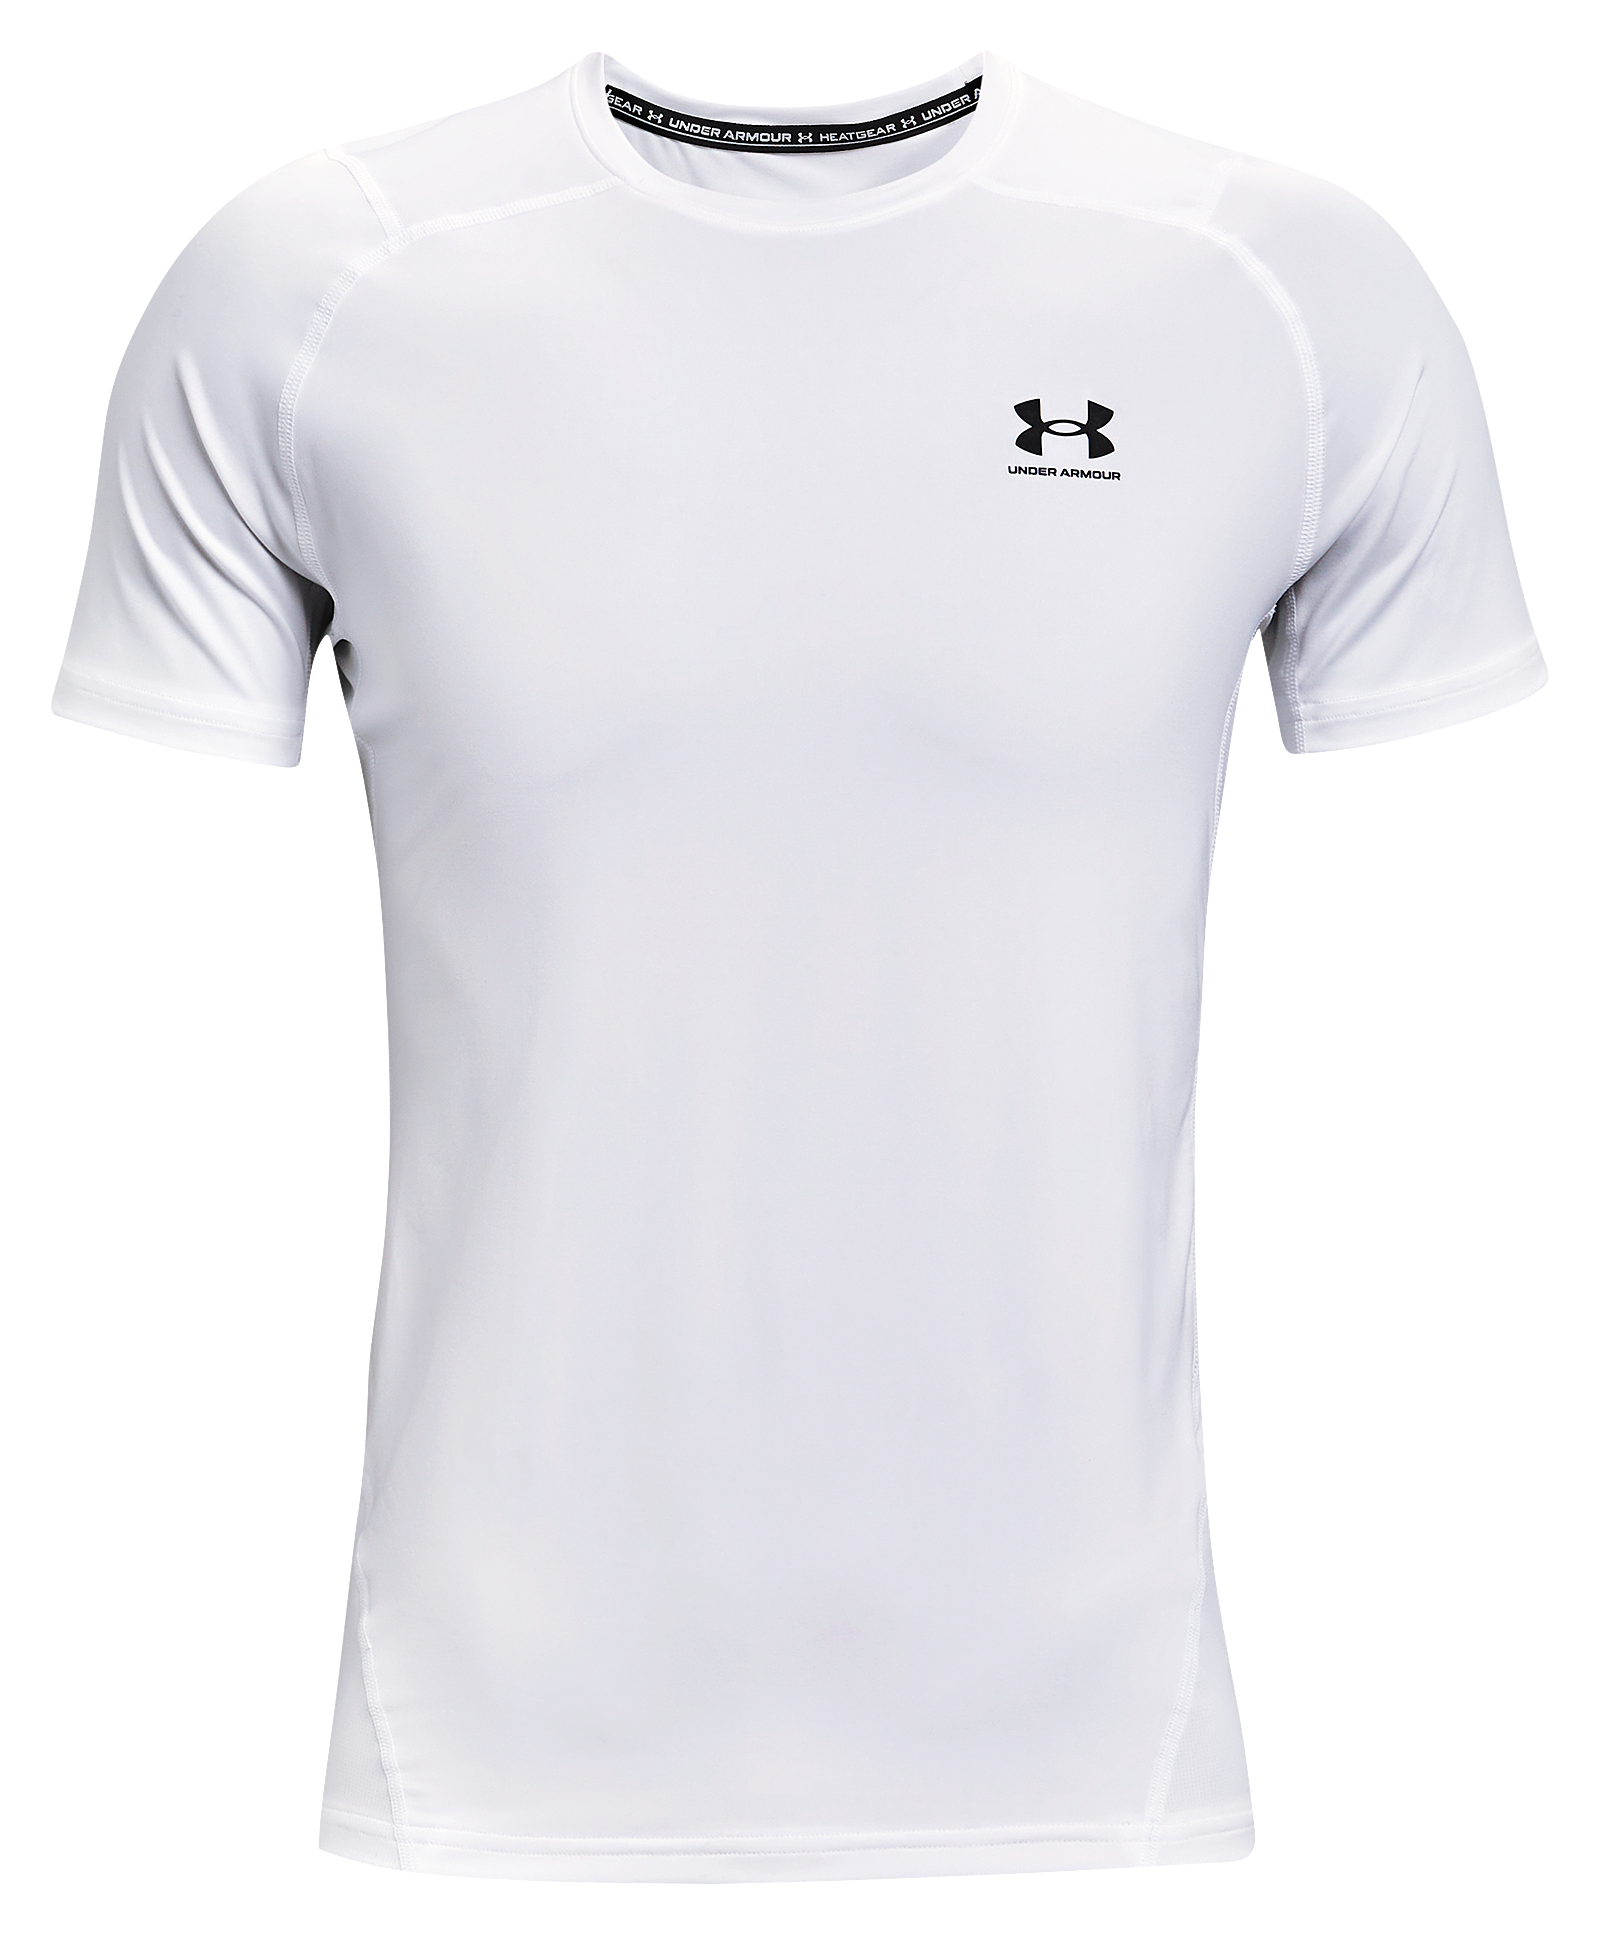 Under Armour HeatGear Fitted Short-Sleeve T-Shirt for Men - White - XLT